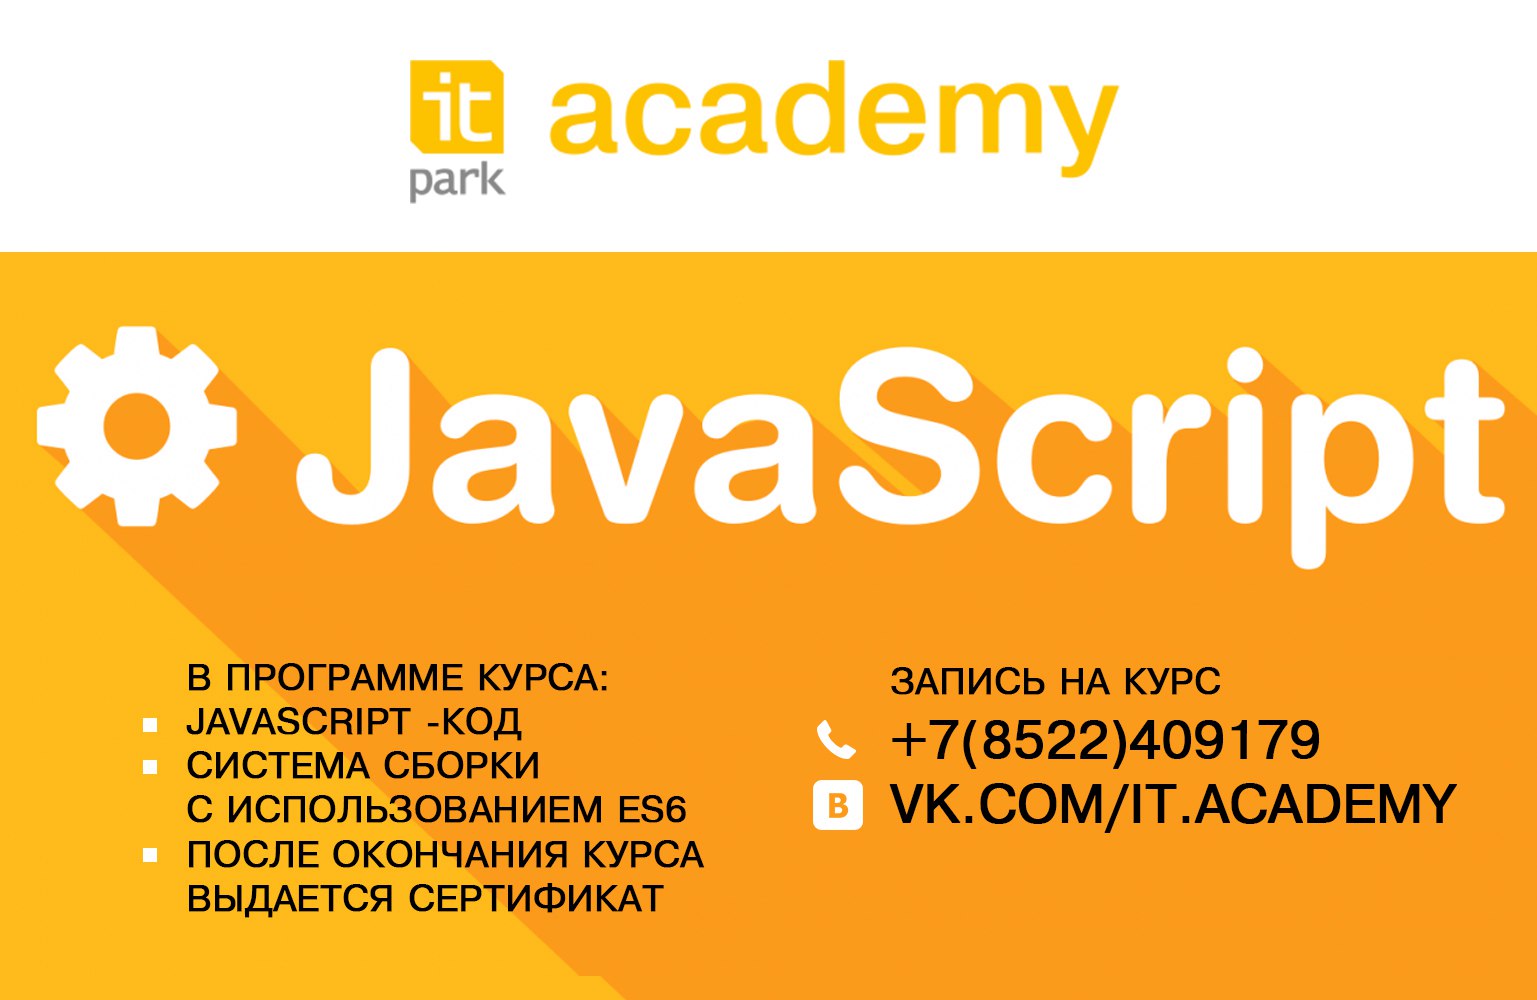 Js events. ИТ парк сертификат. It Academy. It Academy sertifak. ITA Academy slogan.